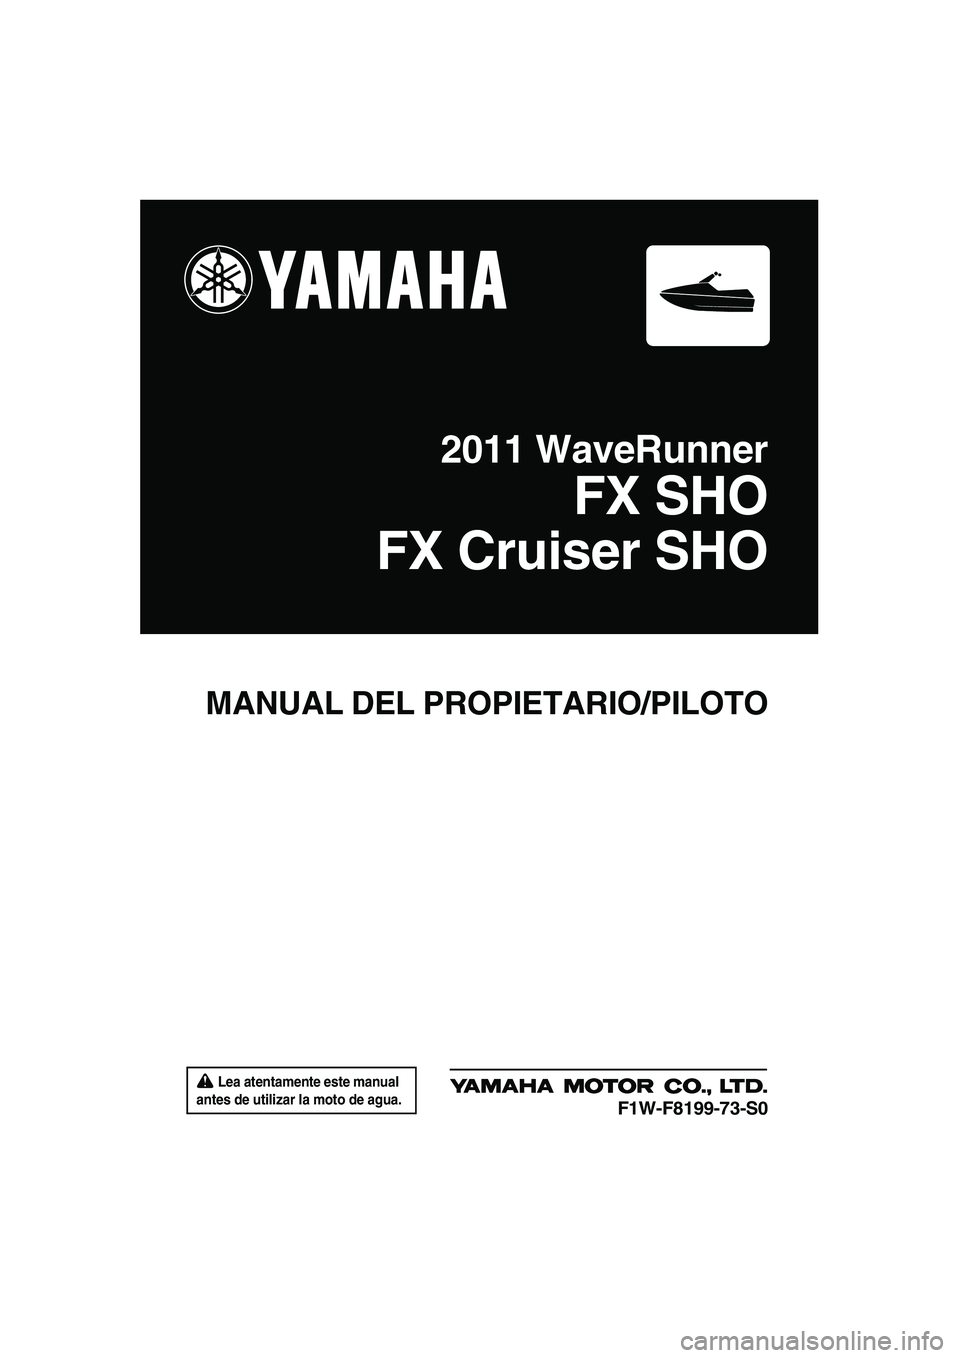 YAMAHA SVHO CRUISER 2011  Manuale de Empleo (in Spanish)  Lea atentamente este manual 
antes de utilizar la moto de agua.
MANUAL DEL PROPIETARIO/PILOTO
2011 WaveRunner
FX SHO
FX Cruiser SHO
F1W-F8199-73-S0
UF1W73S0.book  Page 1  Wednesday, June 16, 2010  2: